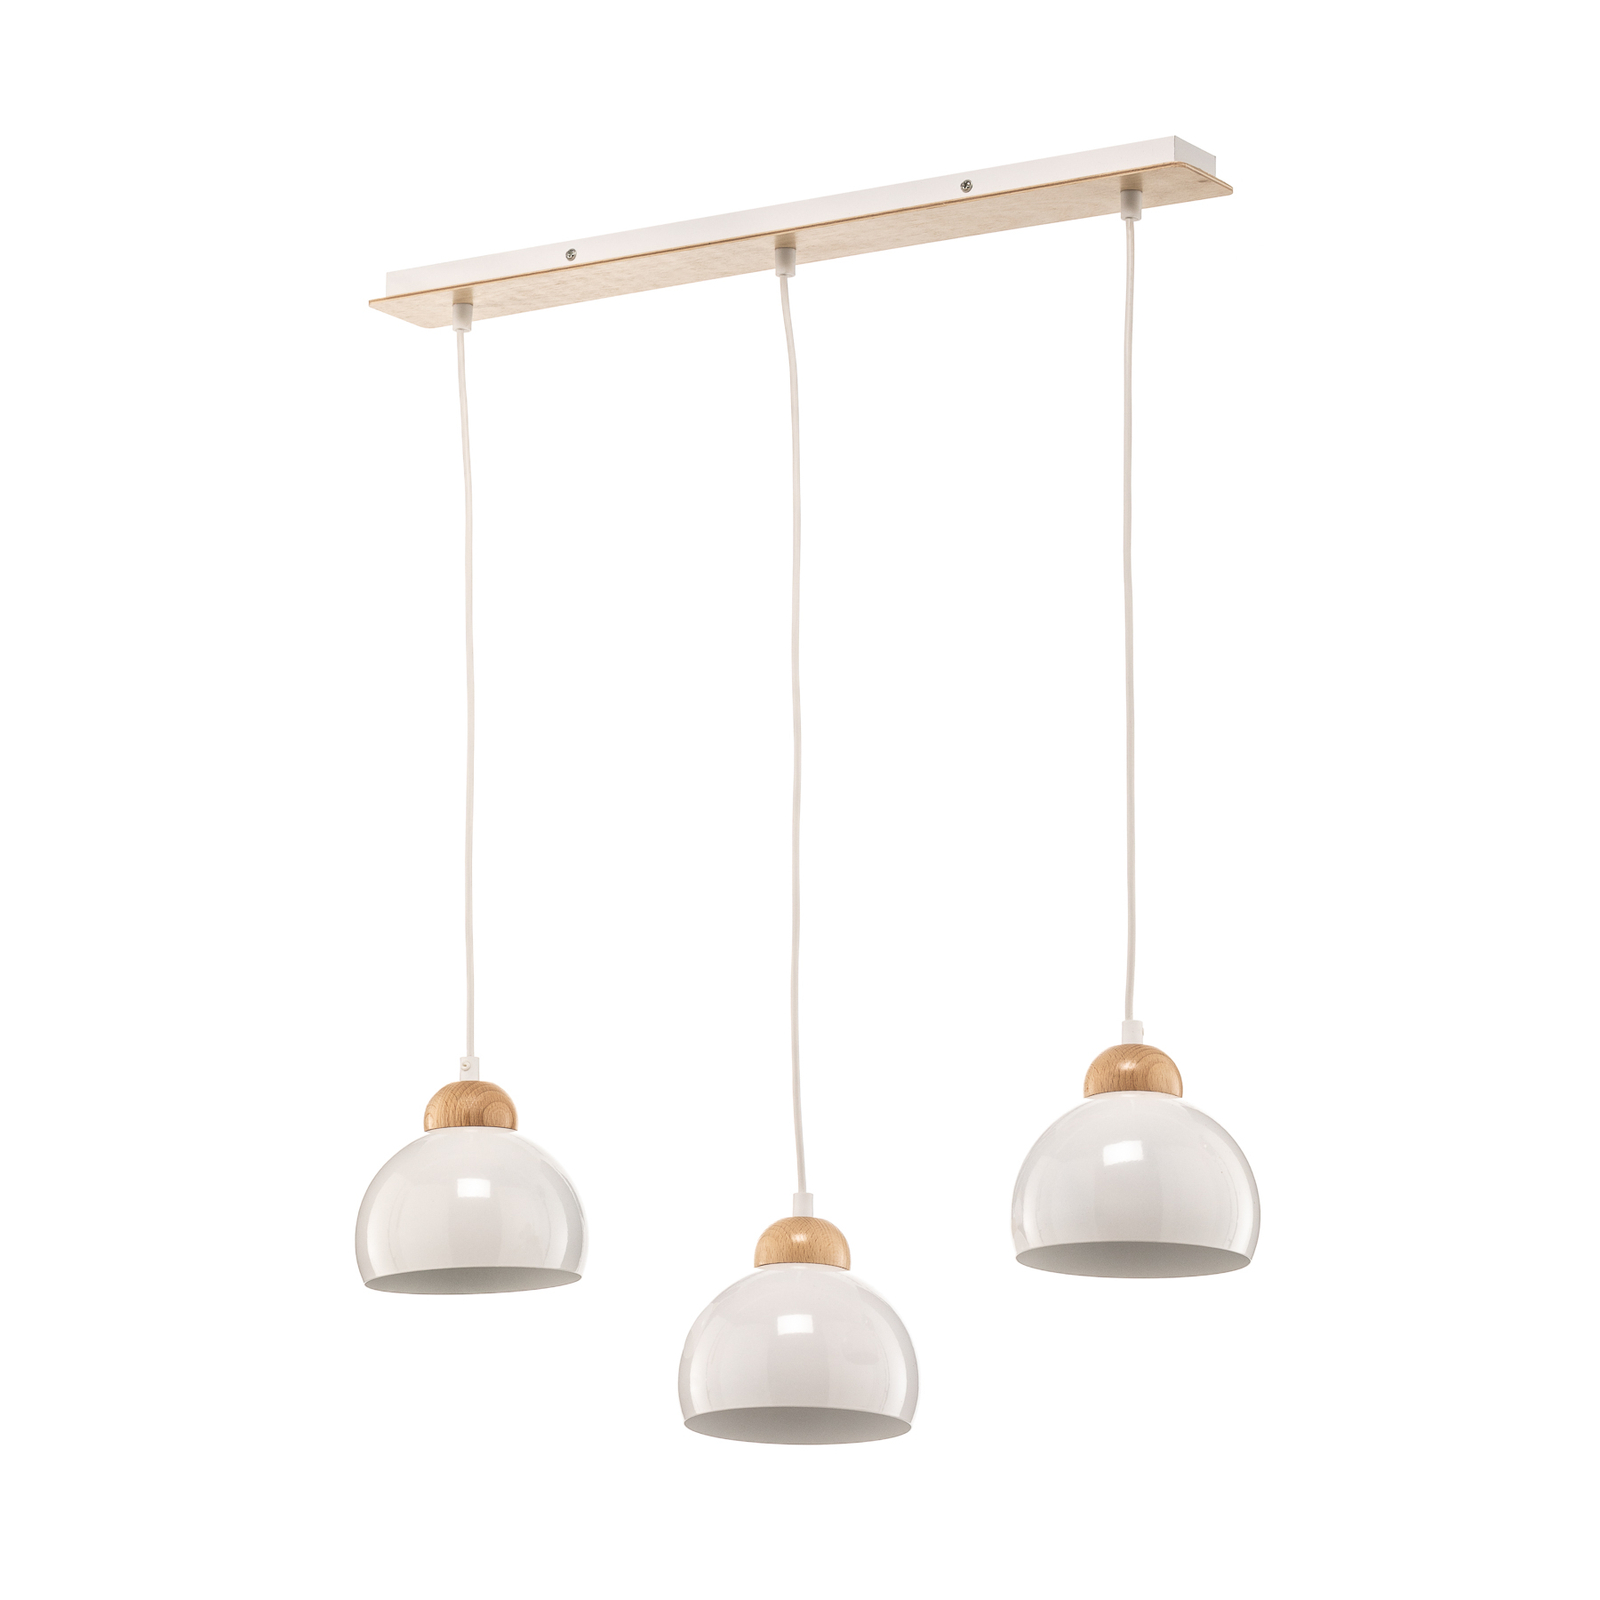 Dama hanging light, three-bulb, white/light wood